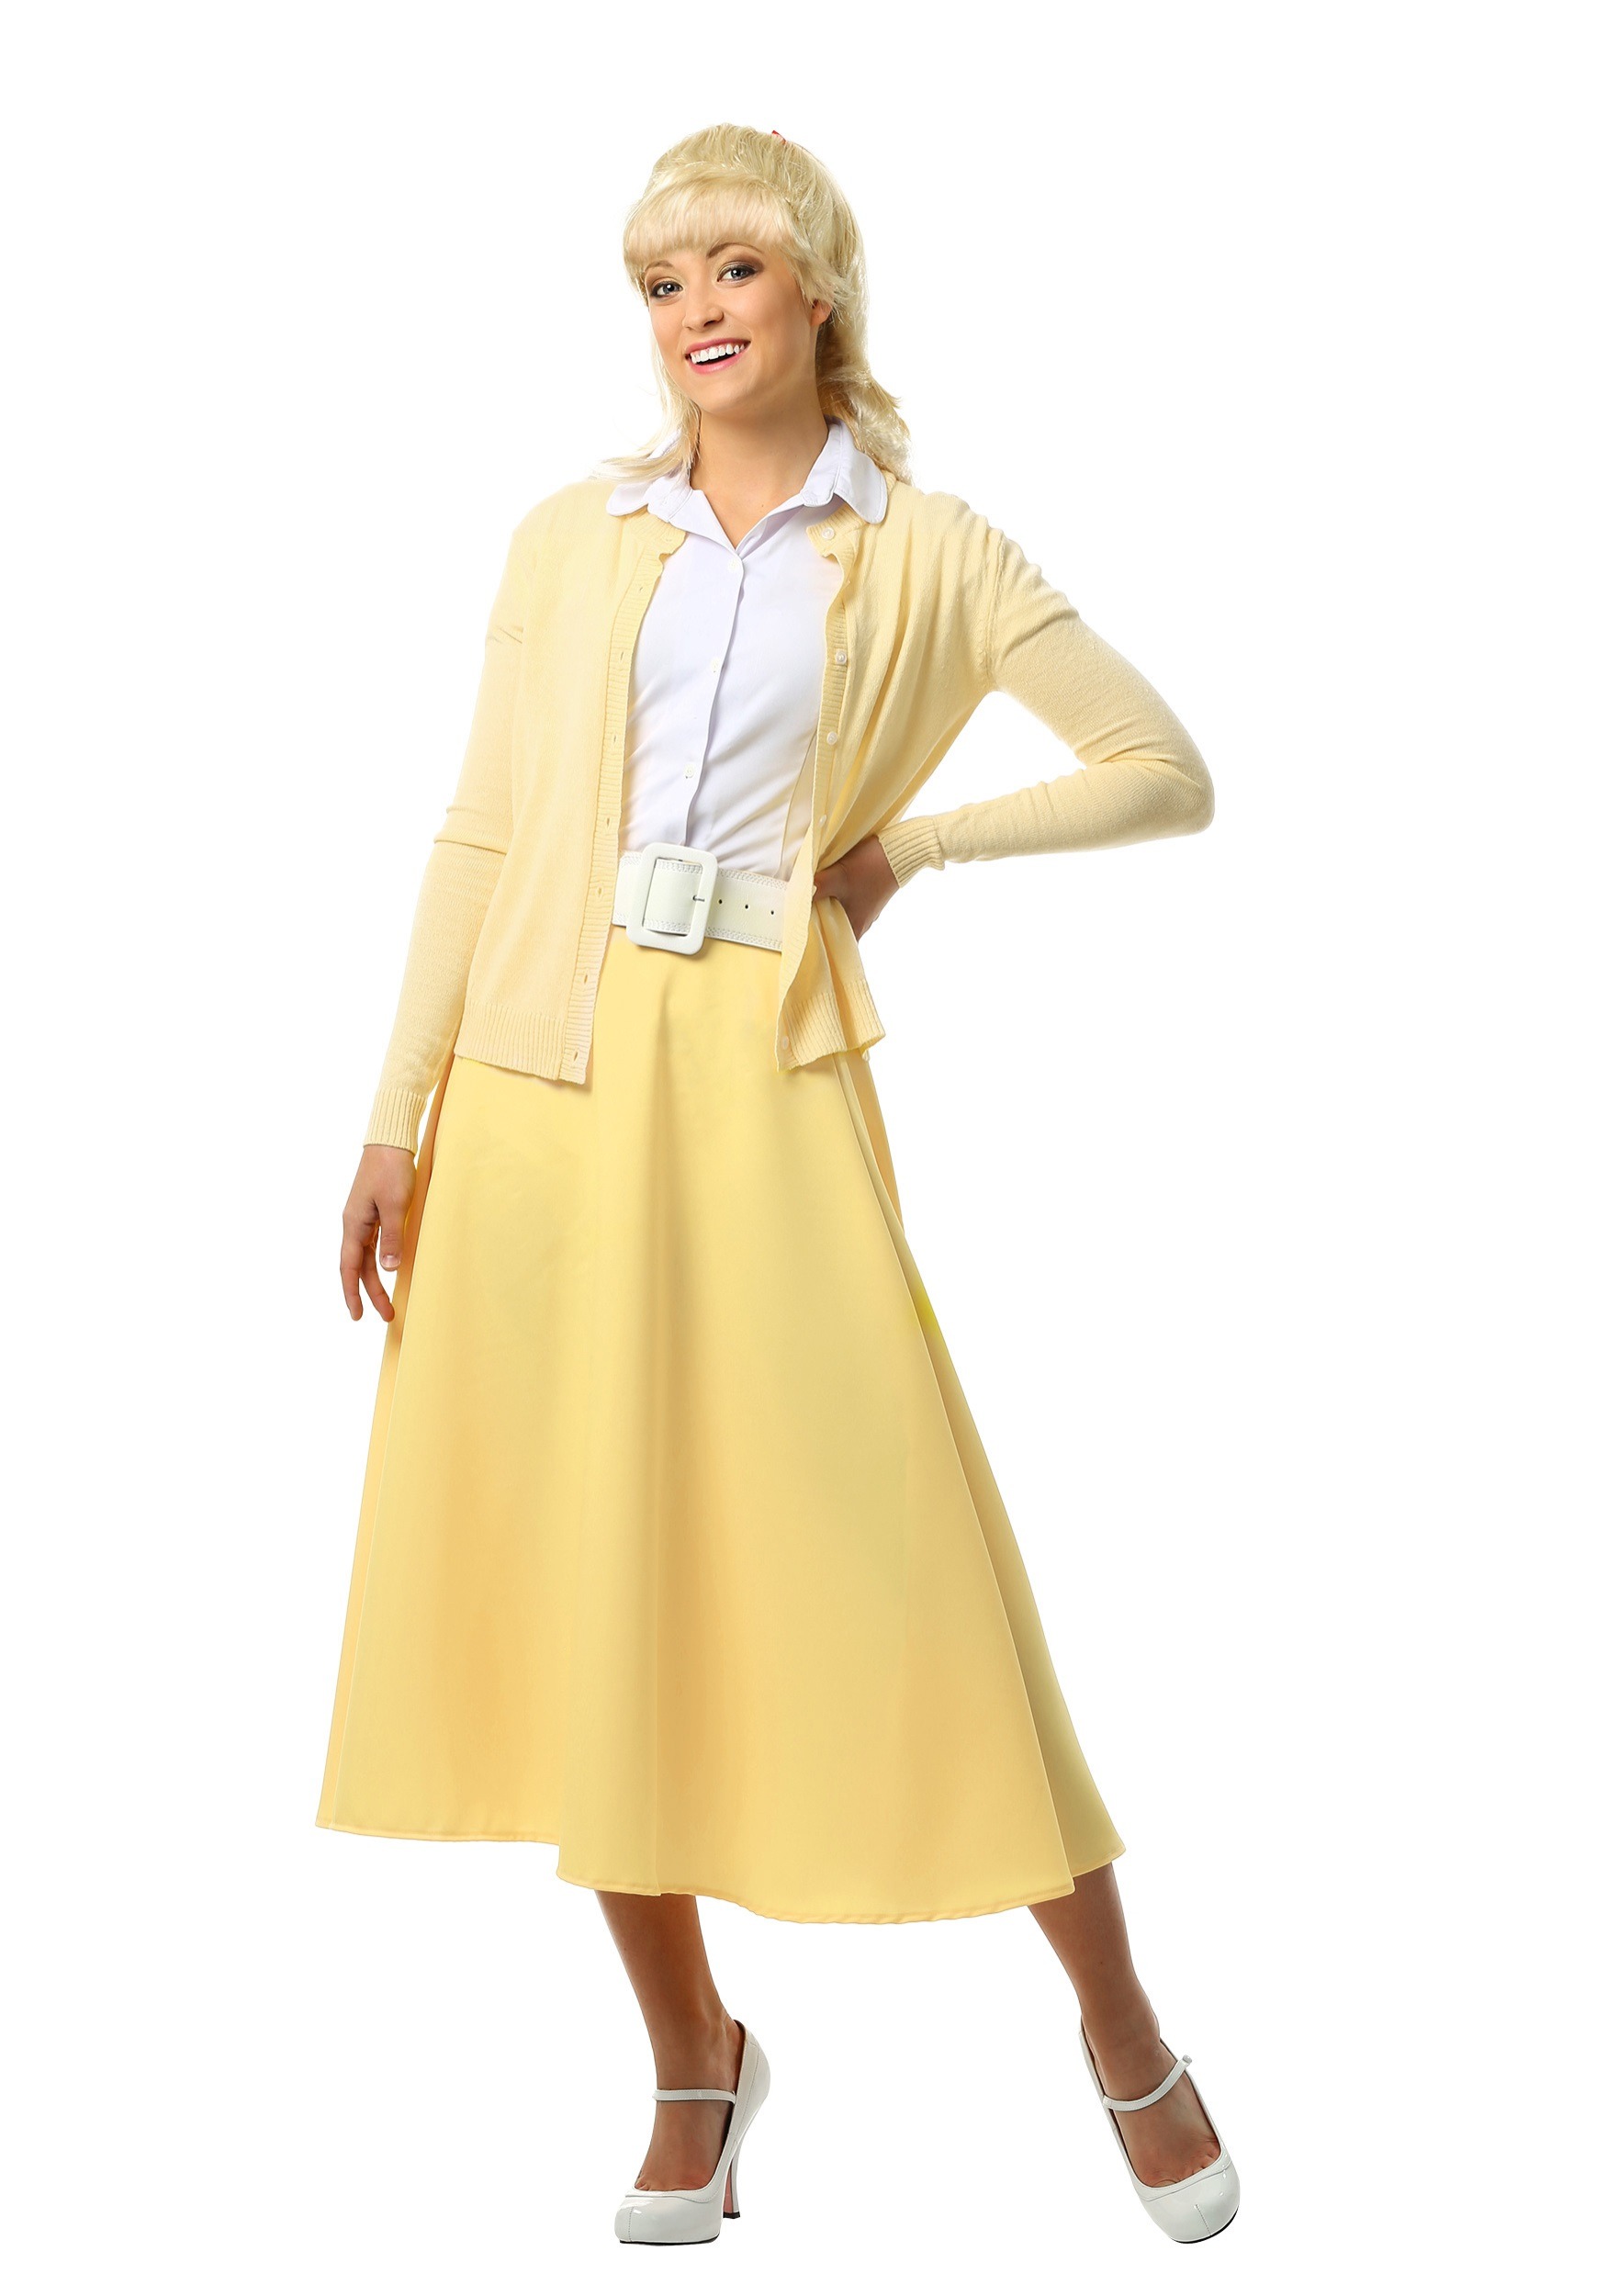 Photos - Fancy Dress Winsun Dress FUN Costumes Grease Good Sandy Costume for Women Yellow/White FUN6607A 